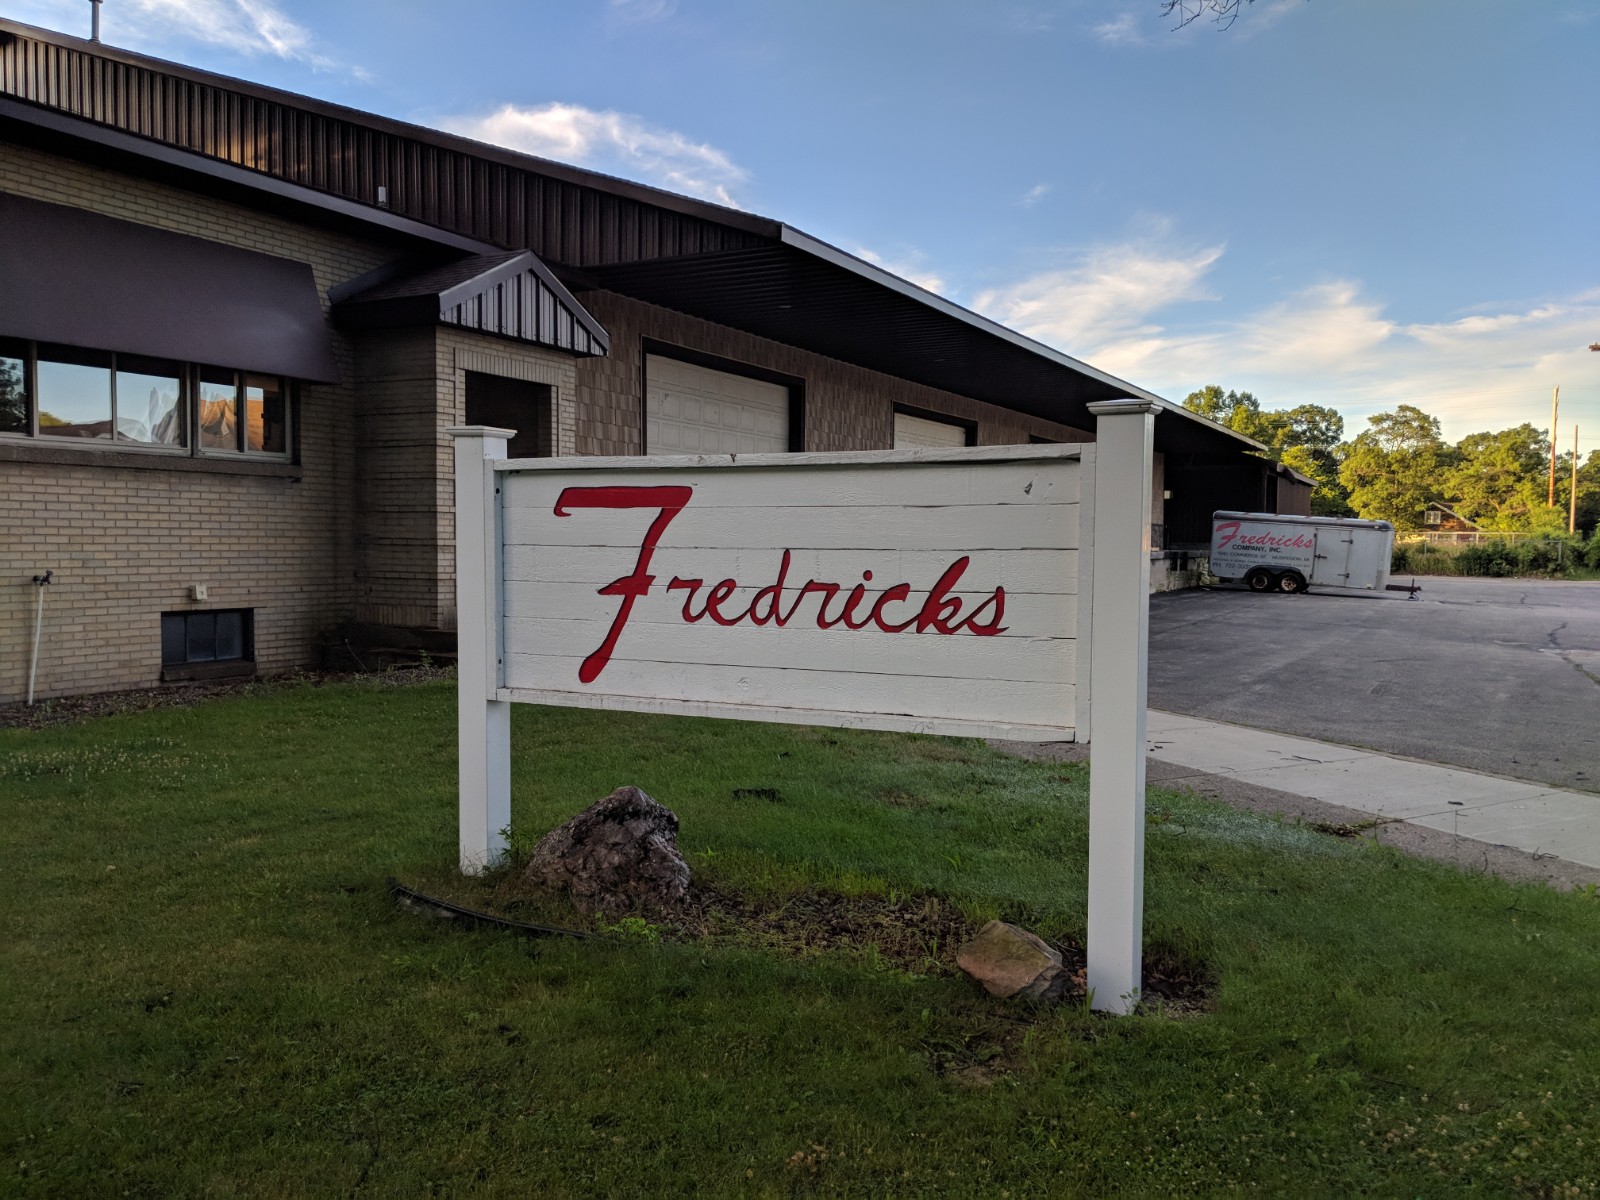 Fredricks Co Inc.